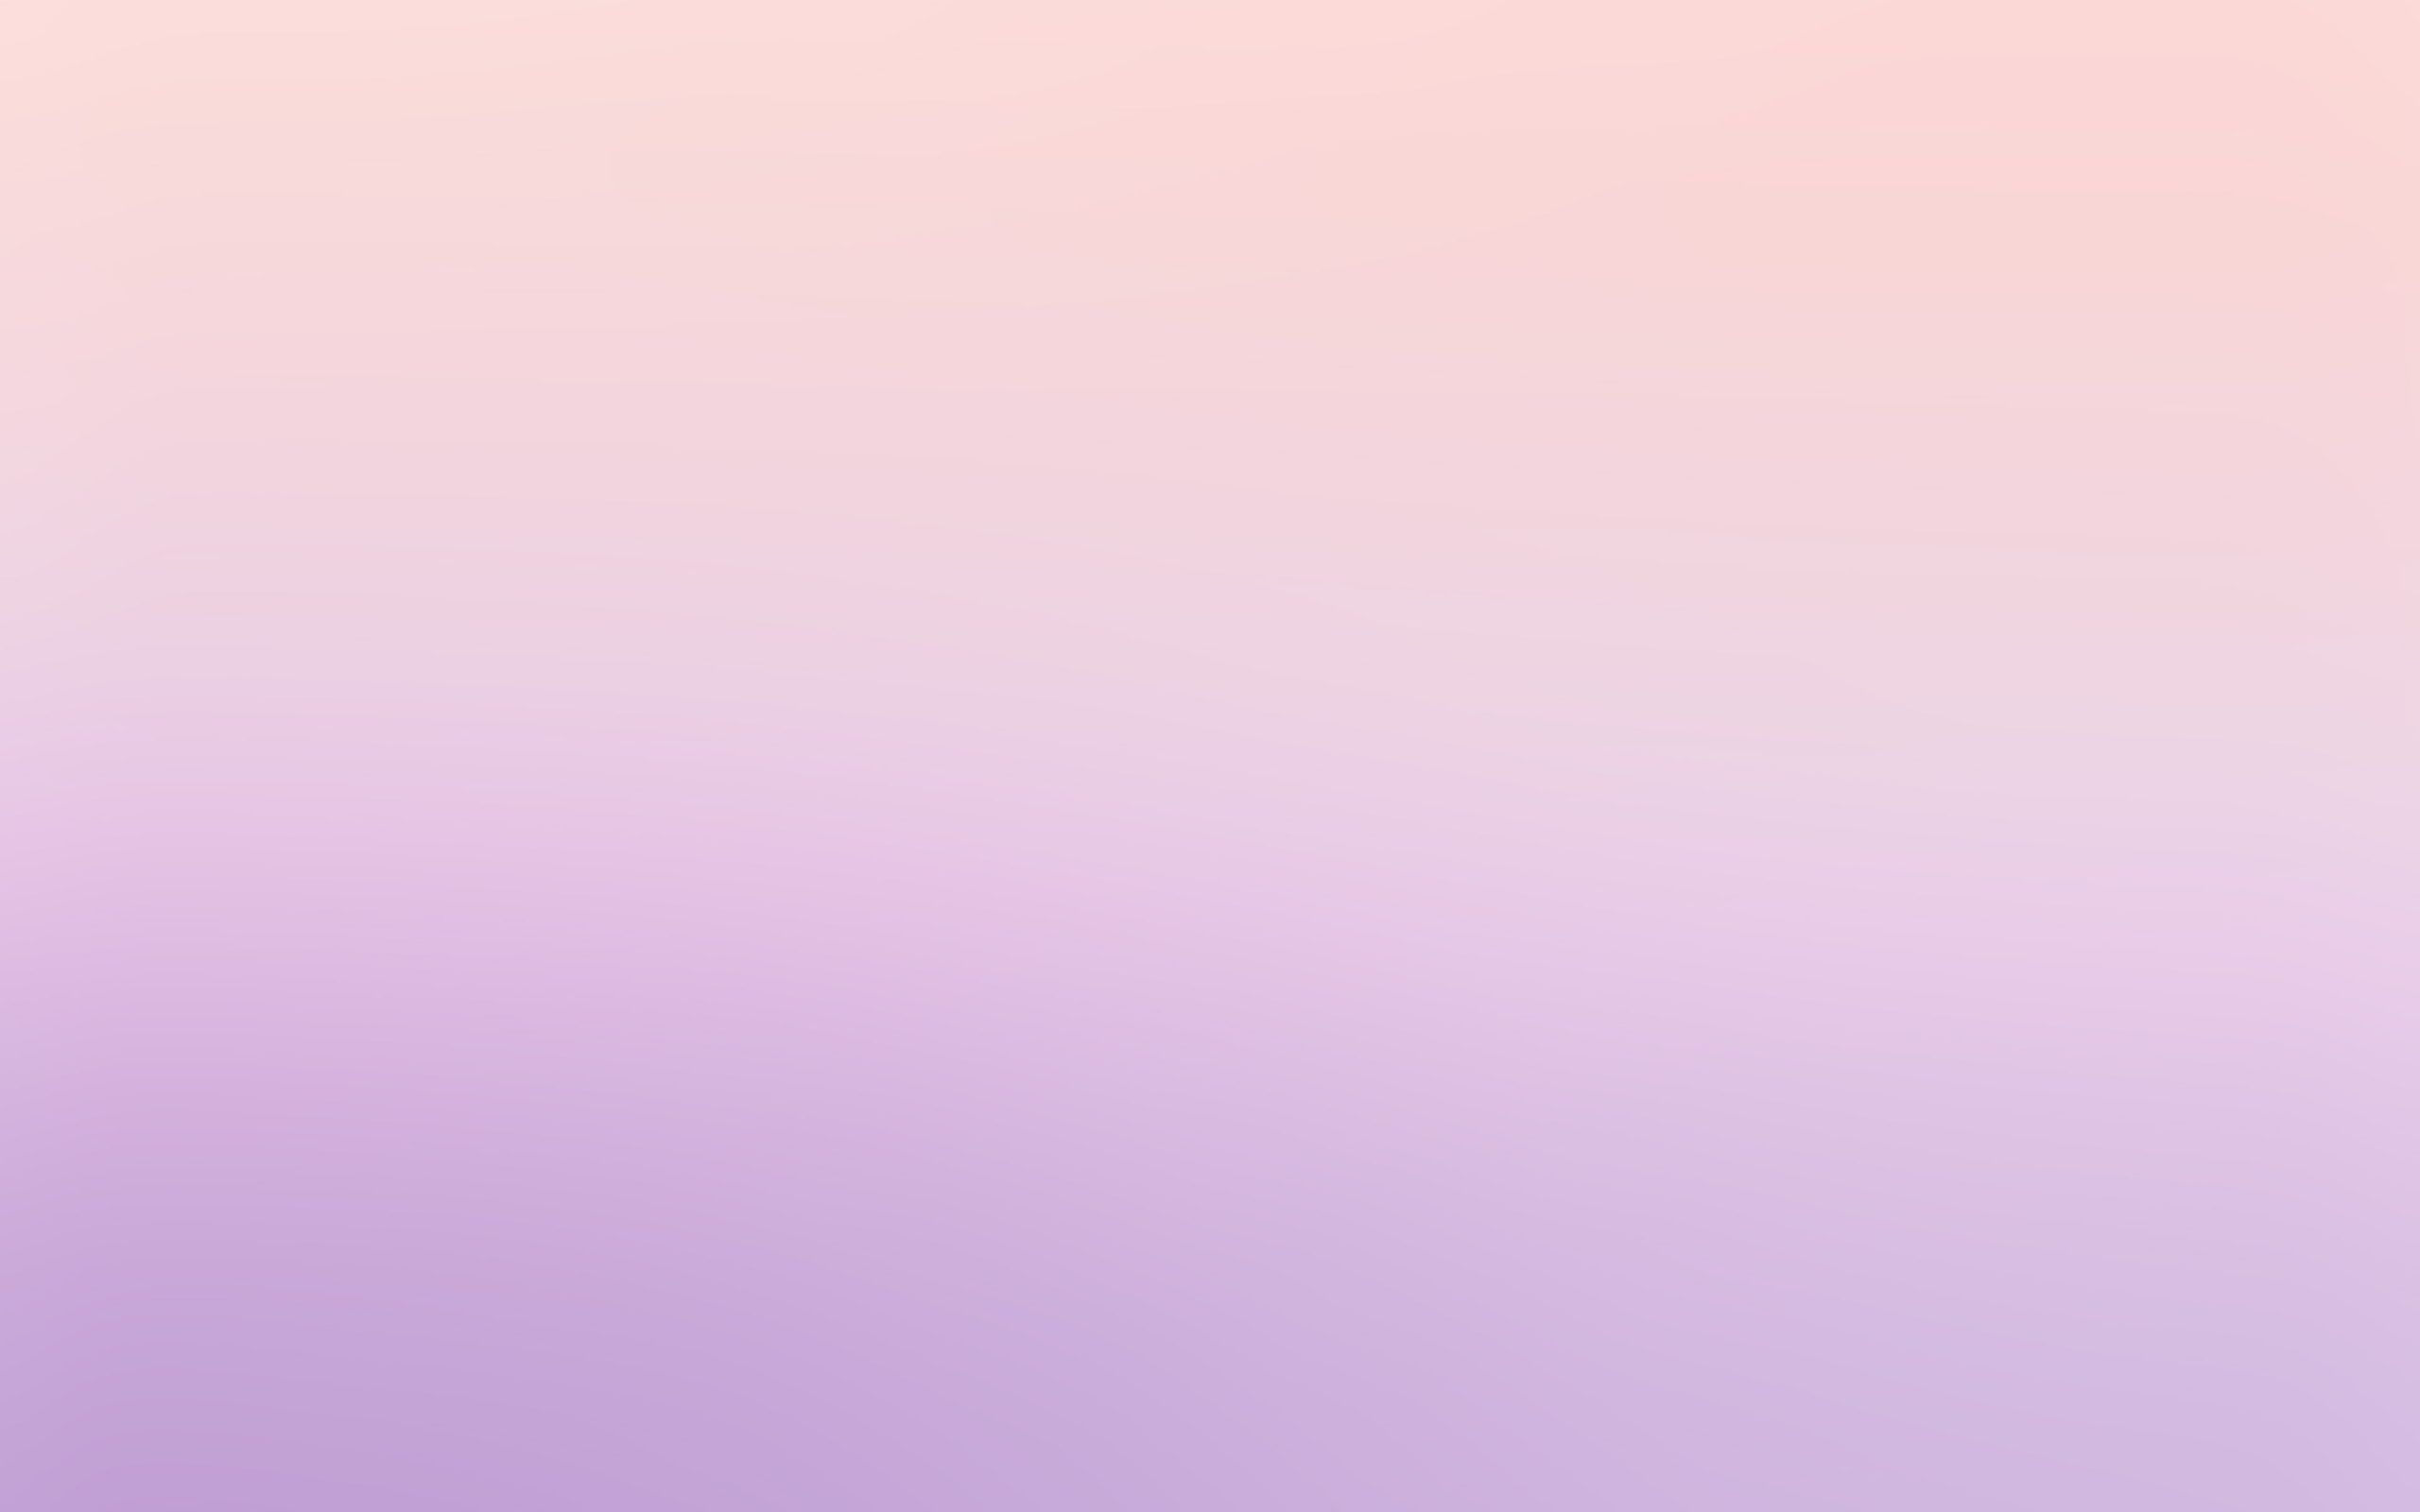 Fondos de pantalla de colores pastel - FondosMil